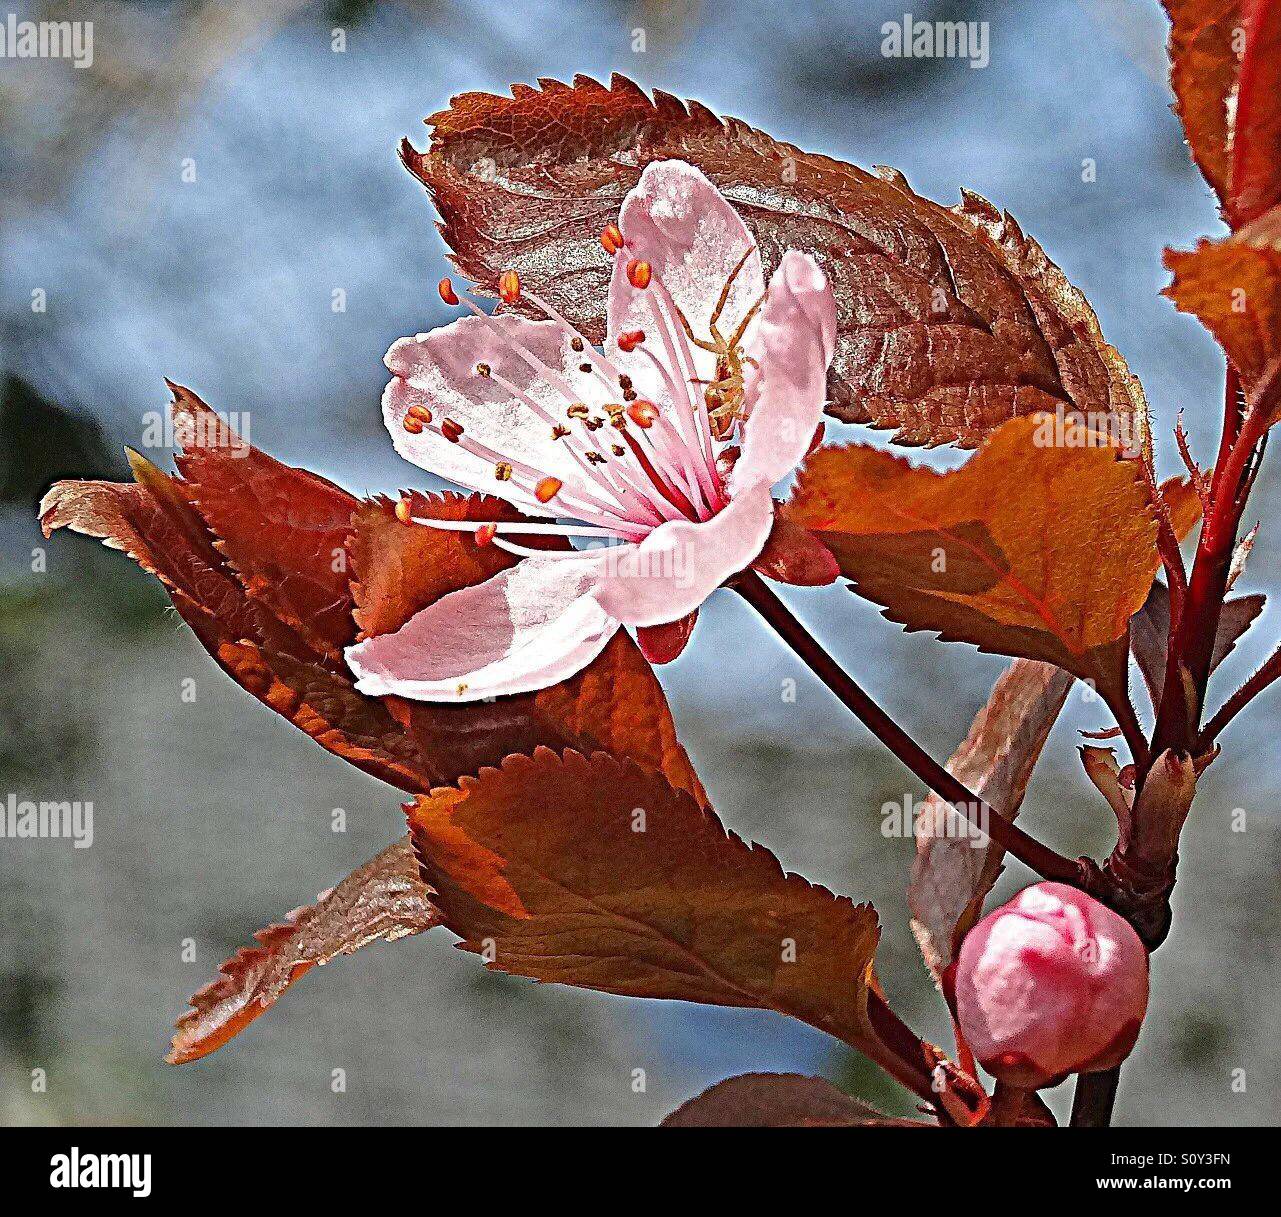 delightful nature Stock Photo - Alamy